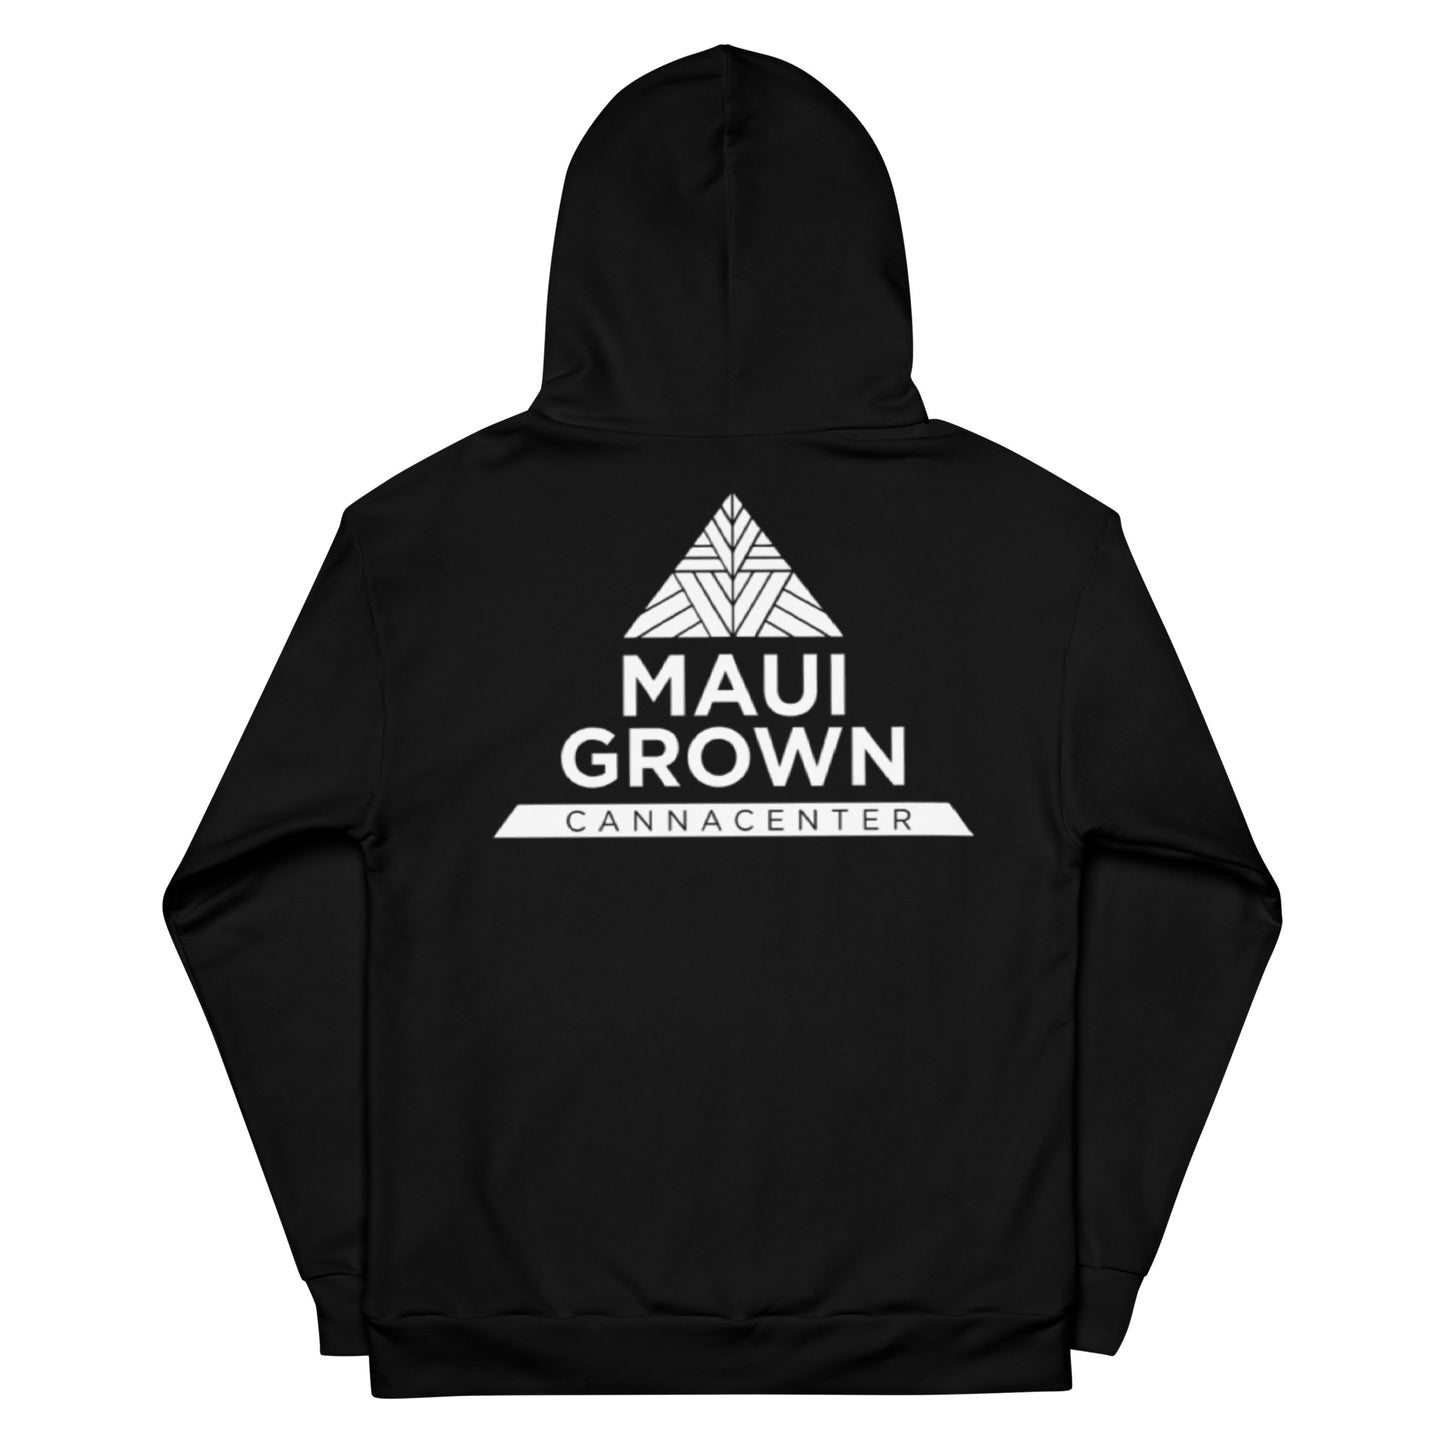 Maui Grown Cannacenter Unisex Hoodie - Black